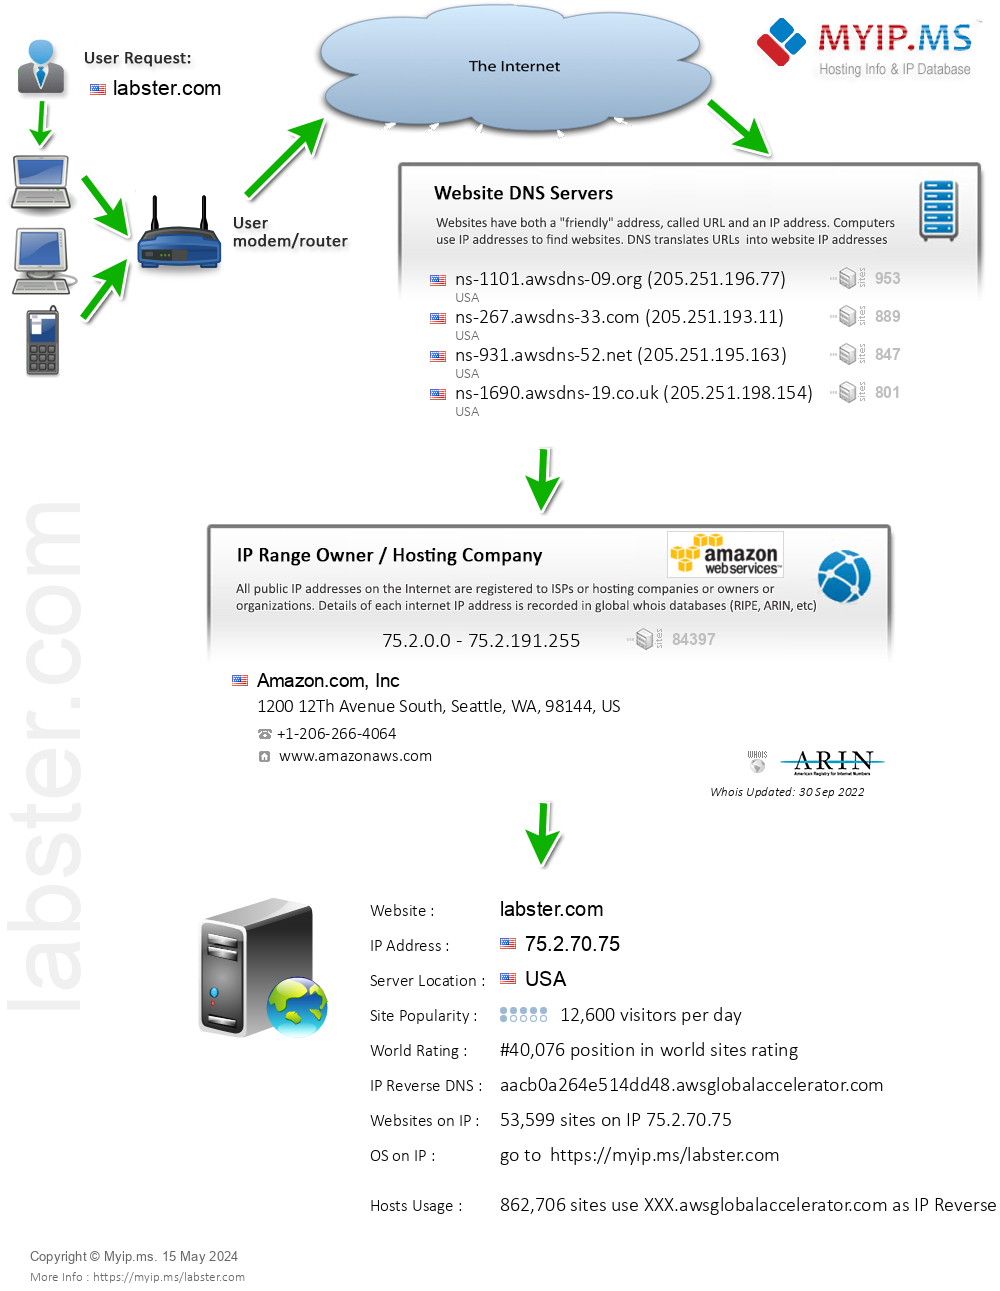 Labster.com - Website Hosting Visual IP Diagram